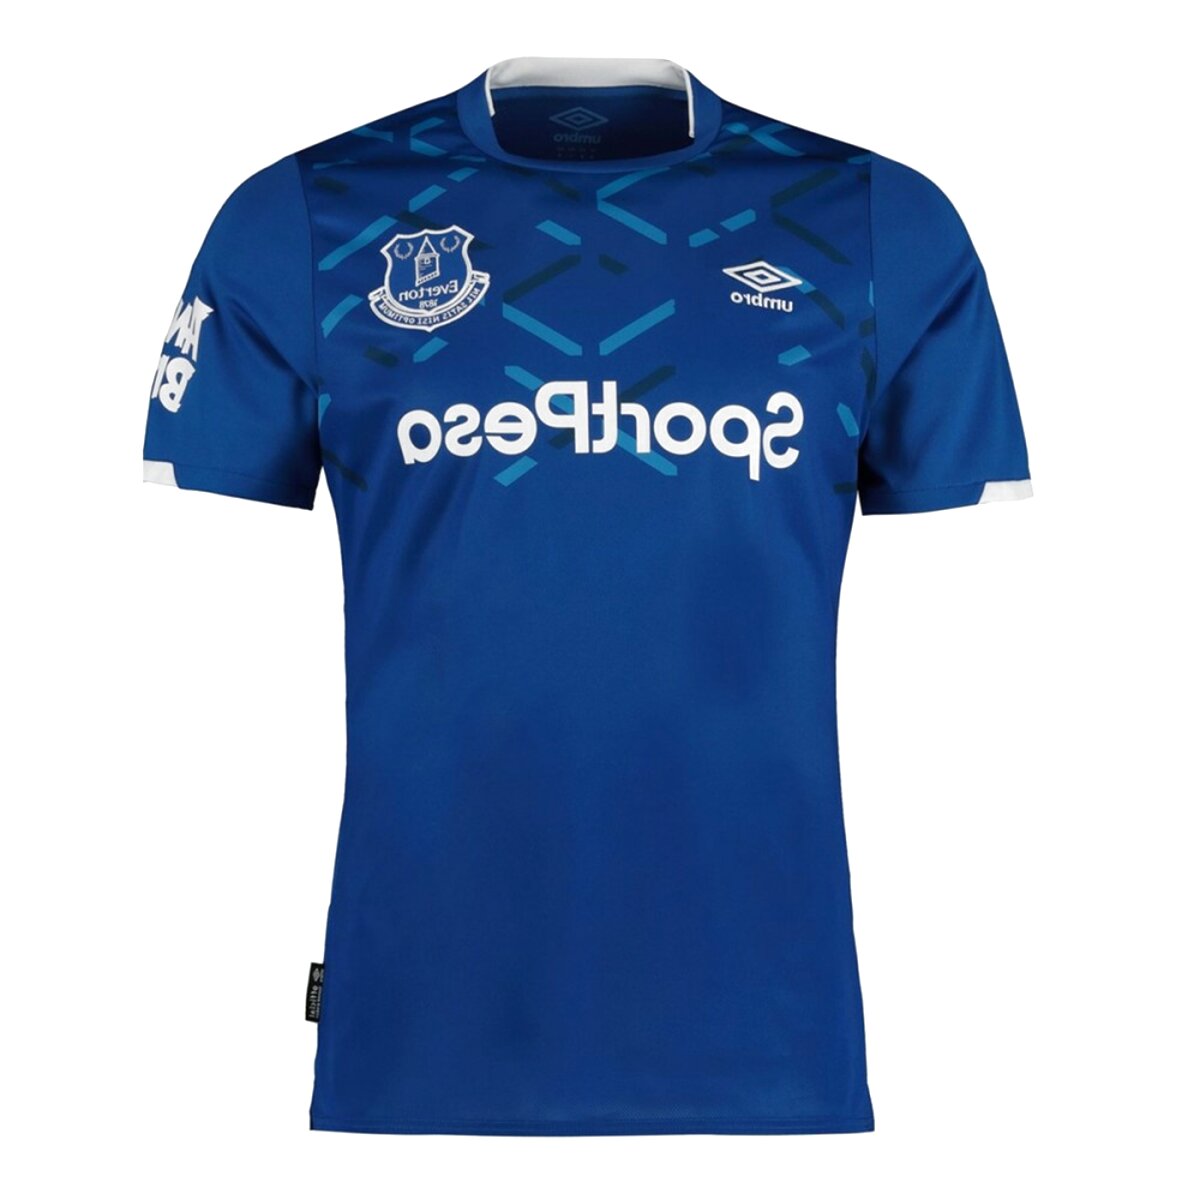 Everton Kit for sale in UK | 57 used Everton Kits